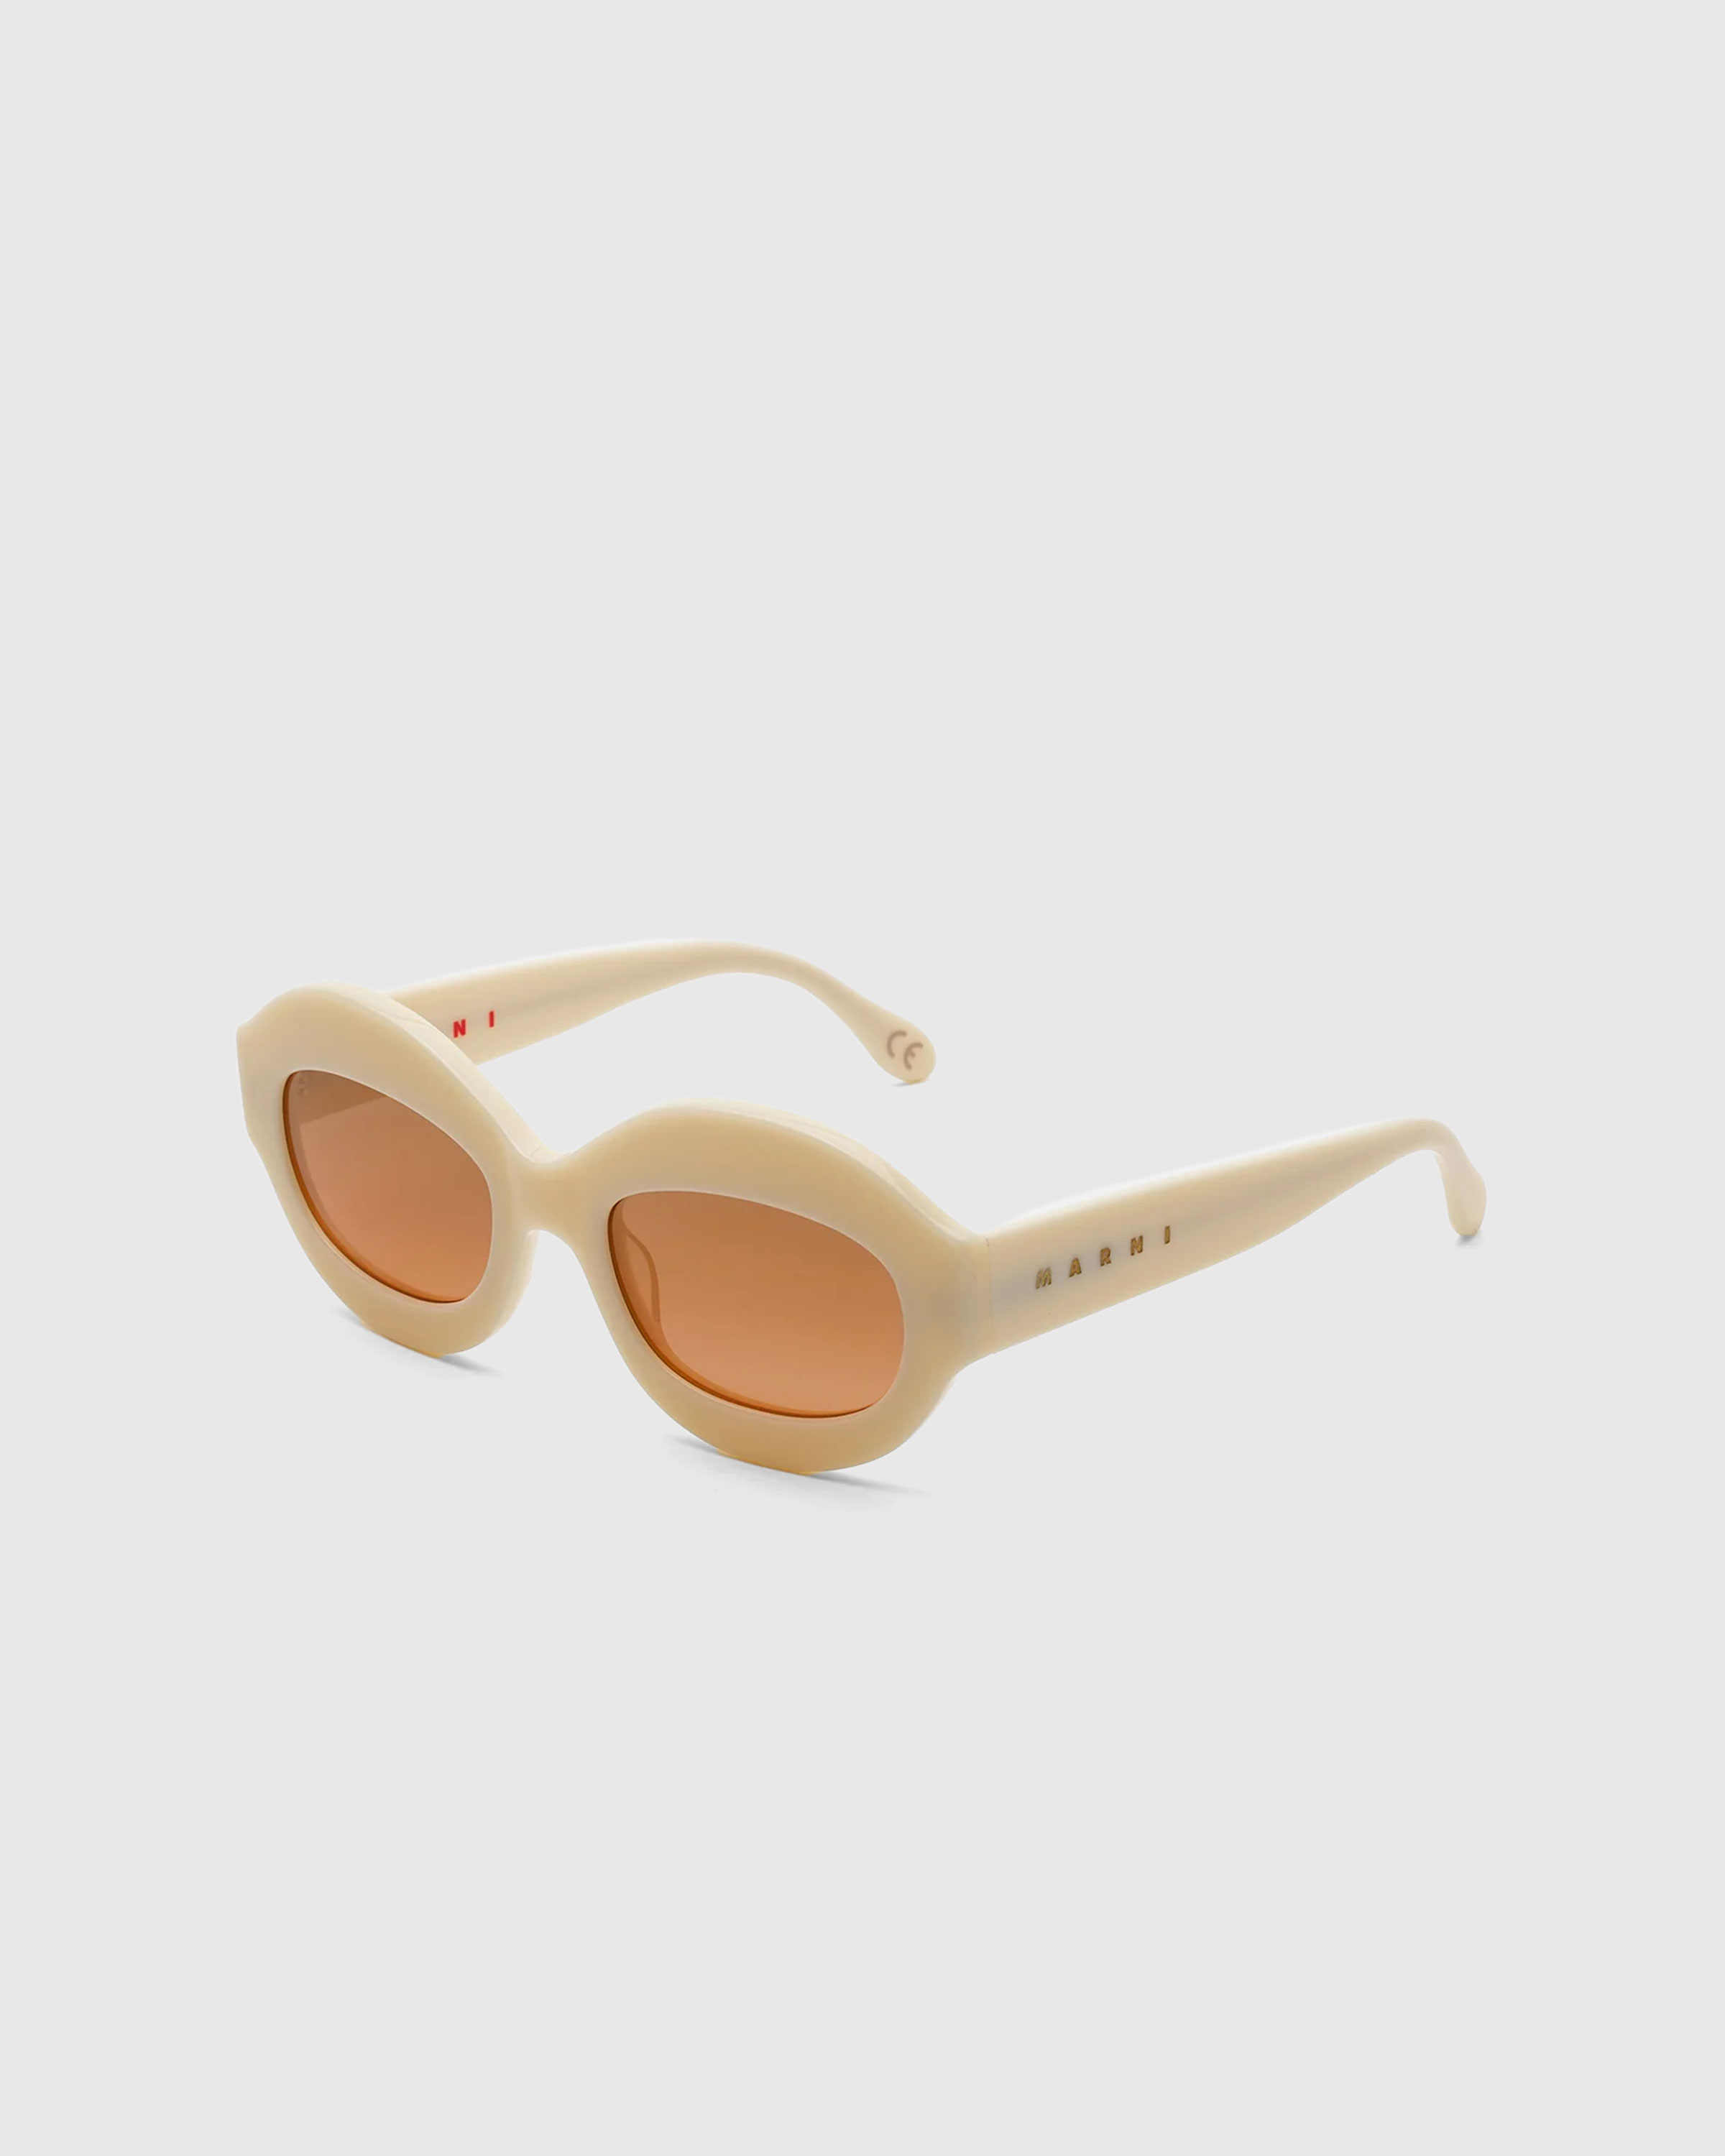 Marni x retrosuperfuture – Ik Kil Cenote Panna - Sunglasses - Beige - Image 4